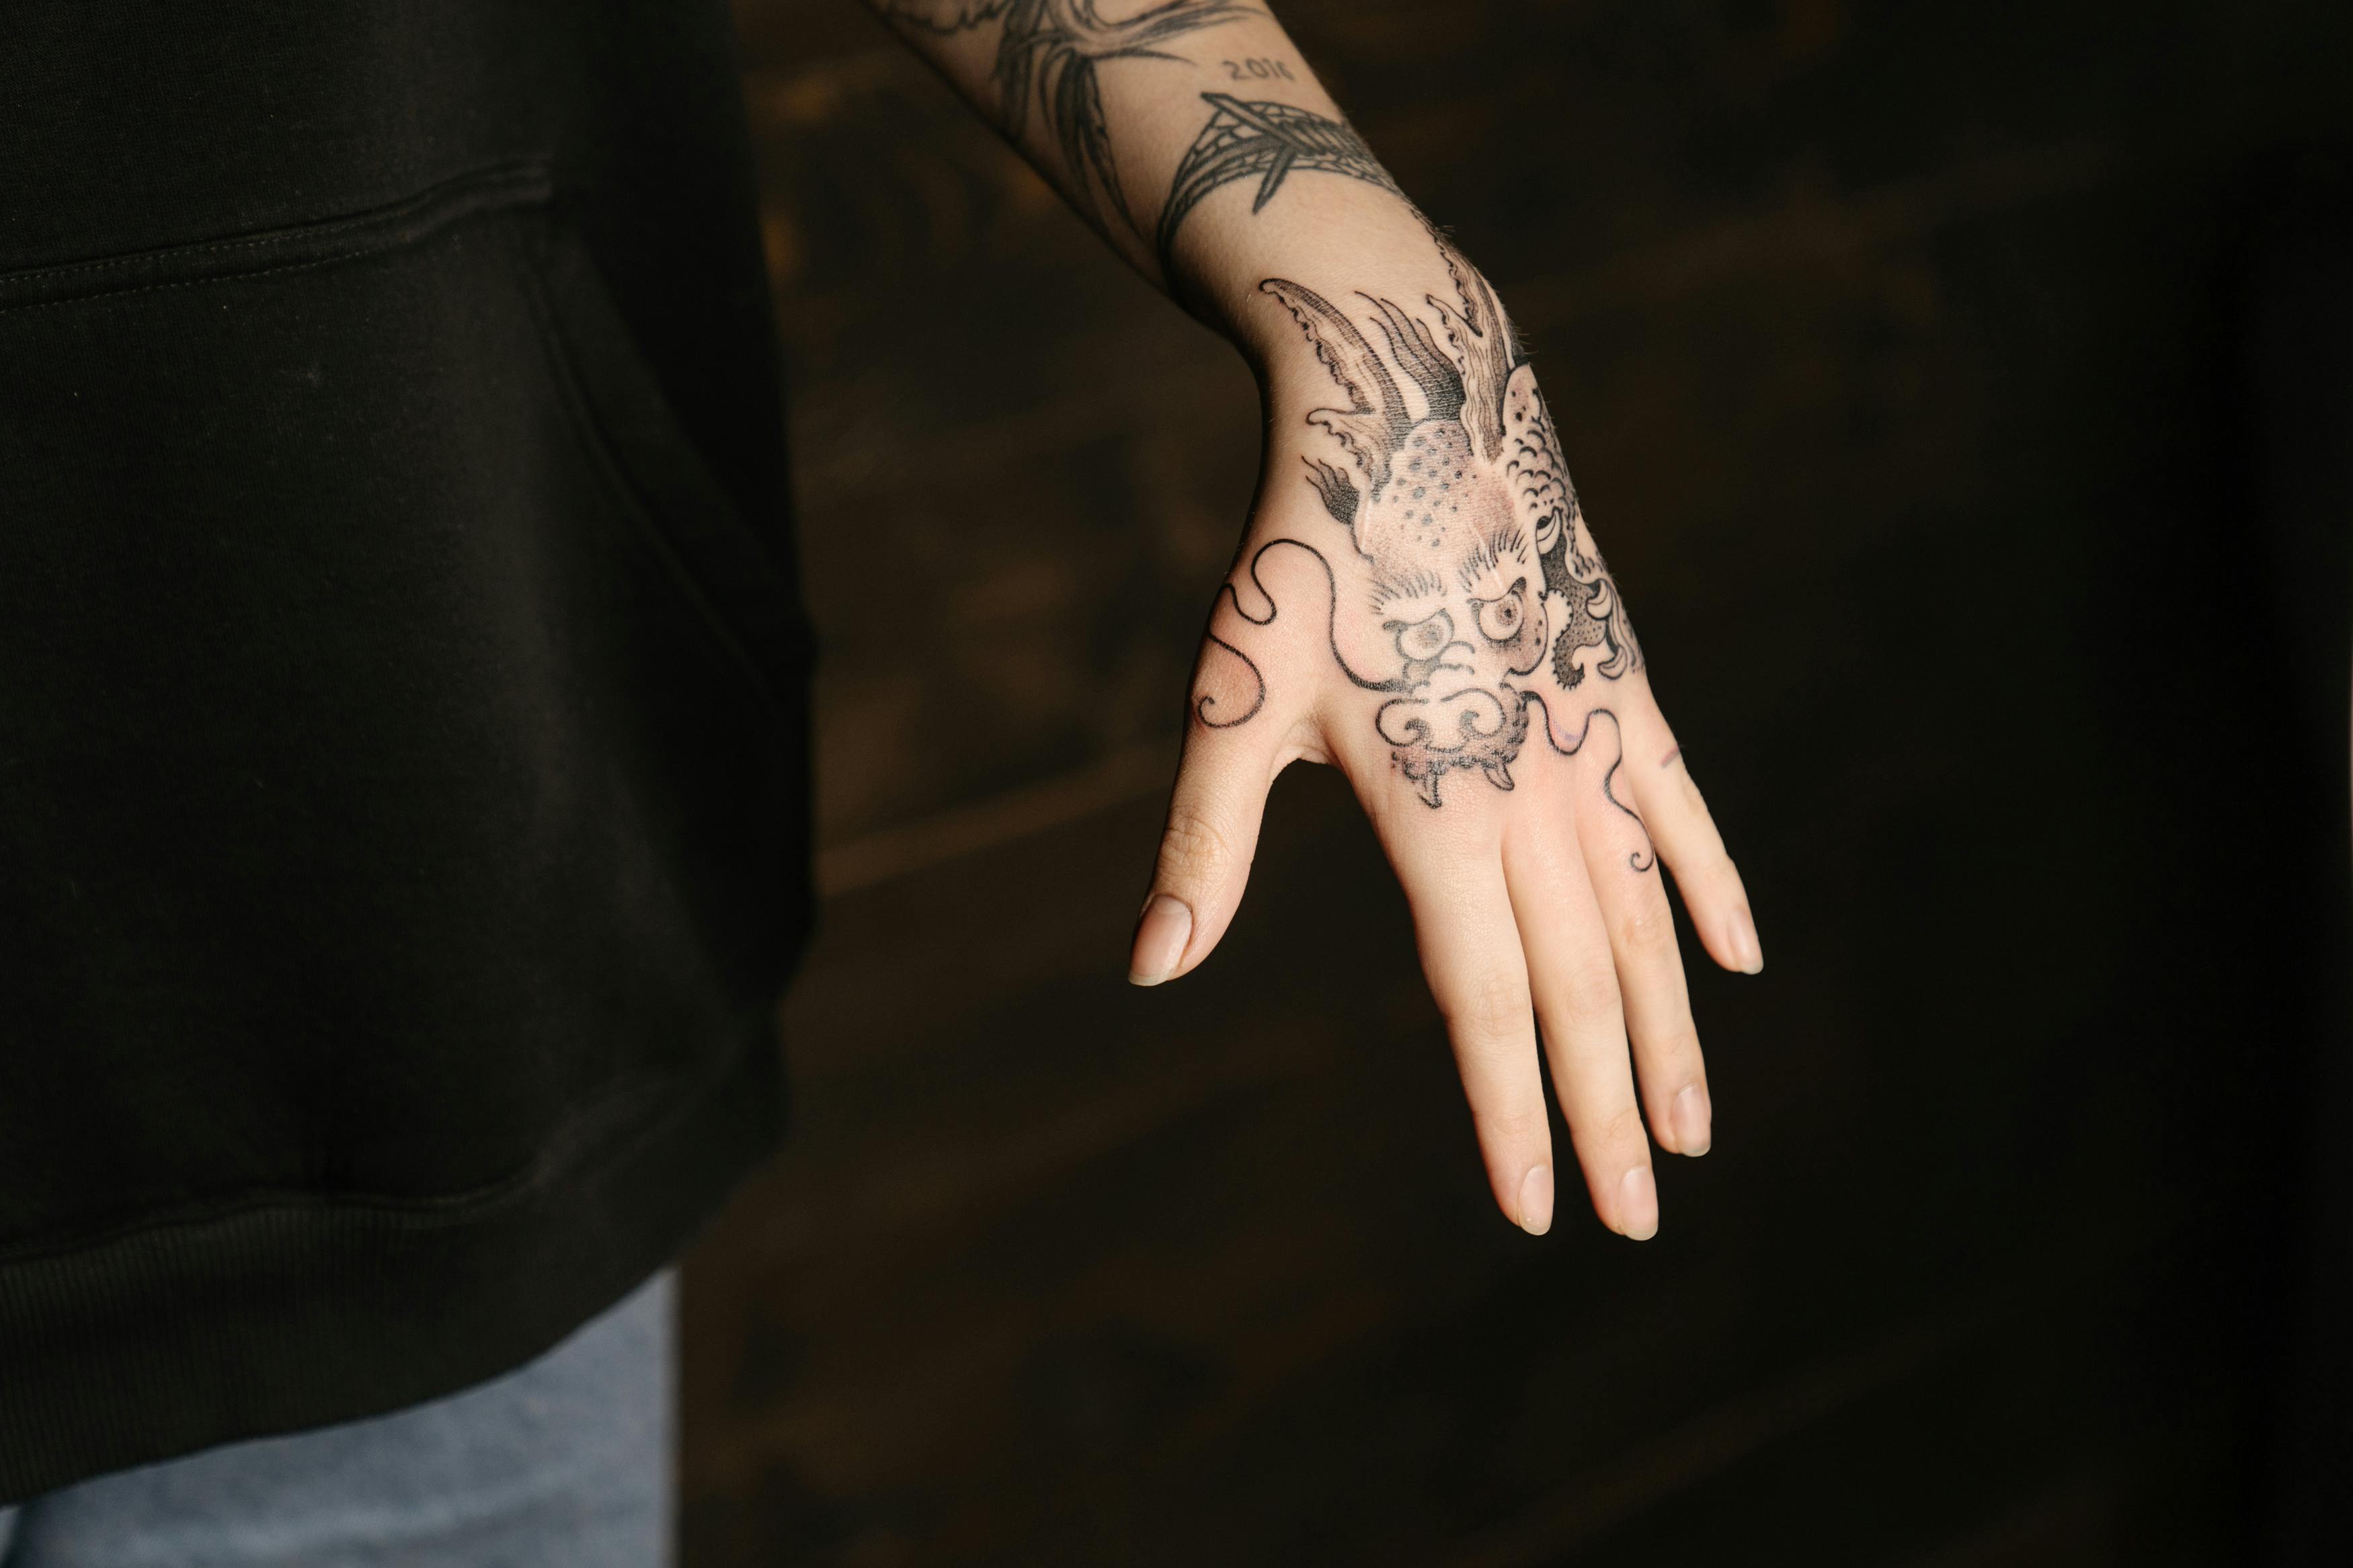 1pc Temporary Tattoo Black Flower Tattoo Sleeves Water Transfer Tatoo  Sticker Peony Rose Tattoos  Fruugo IN